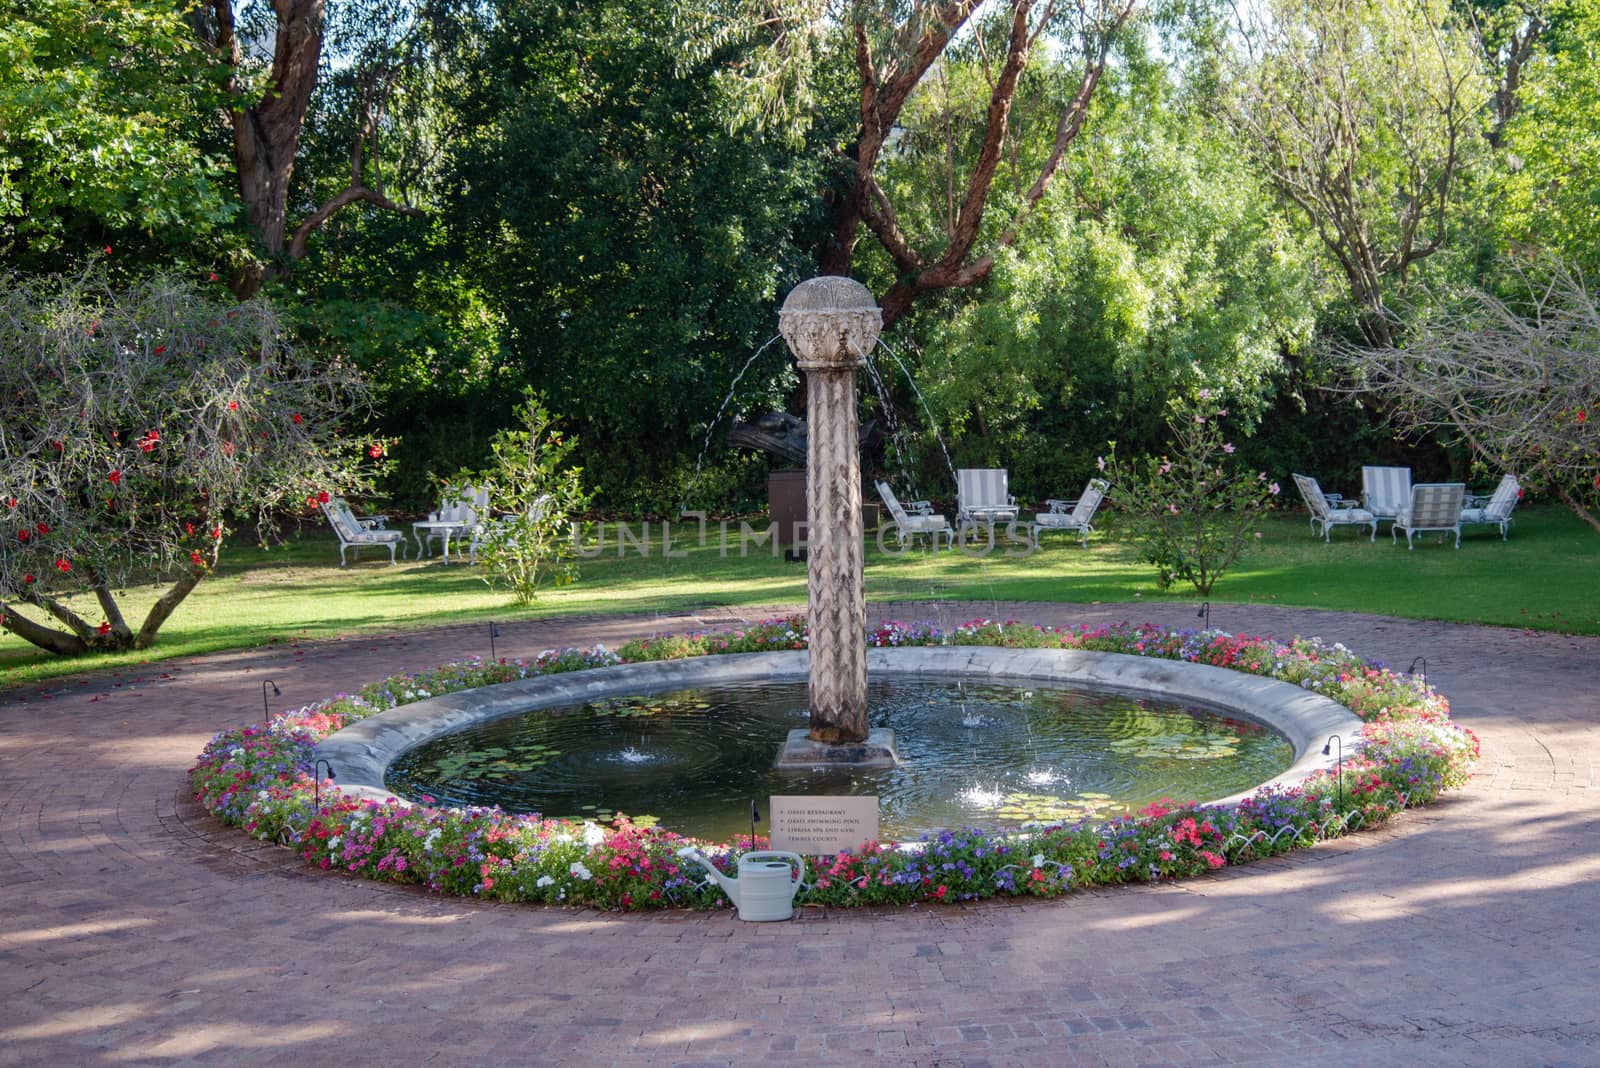 Fountain in a Garden by jfbenning